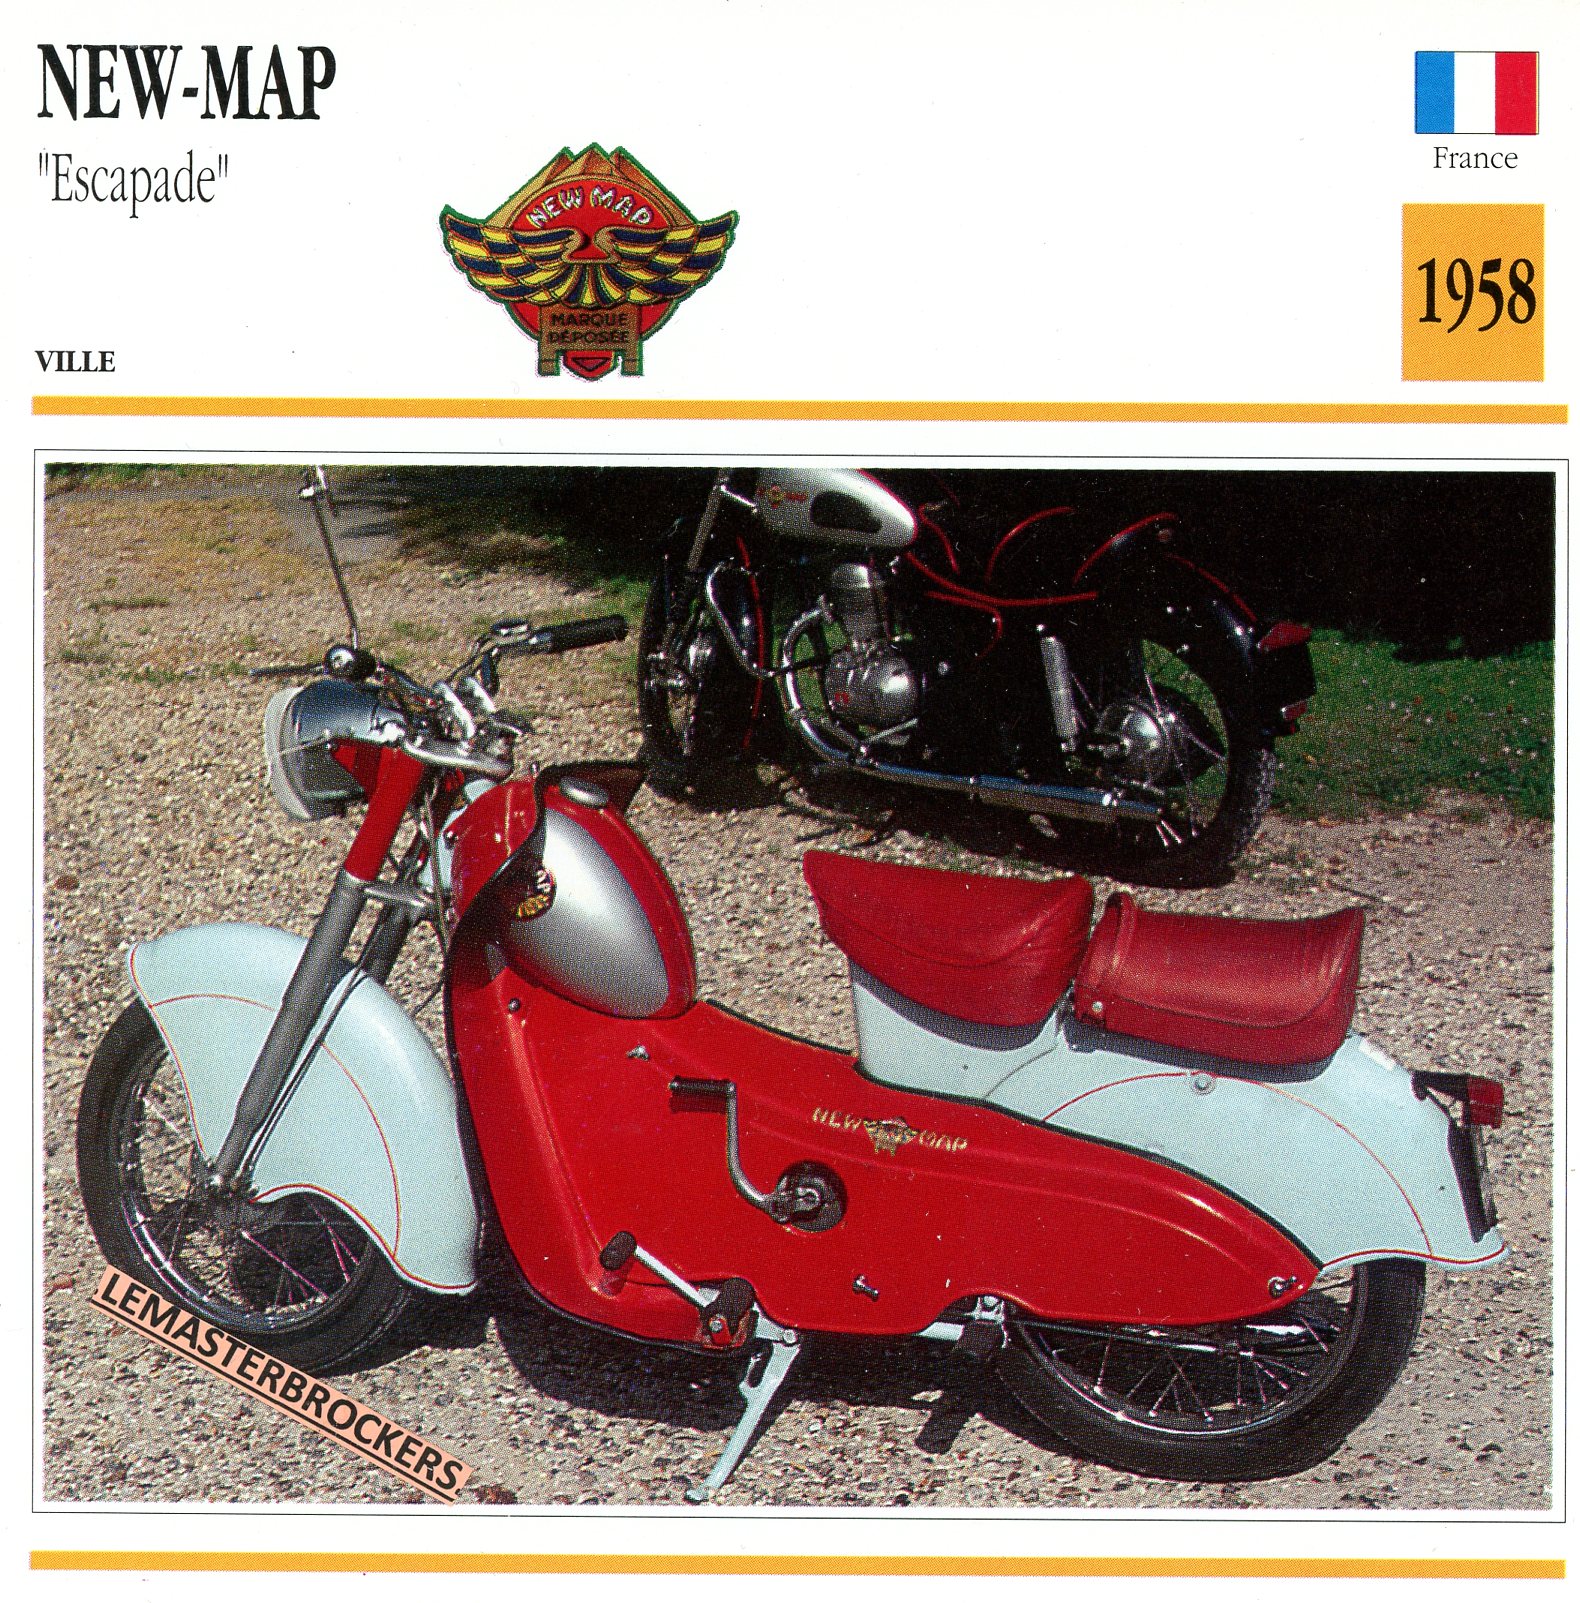 7 new-mpa-escapade-1958-newmap-fiche-moto-atlas-lemasterbrockers-card-motorcycle.jpeg